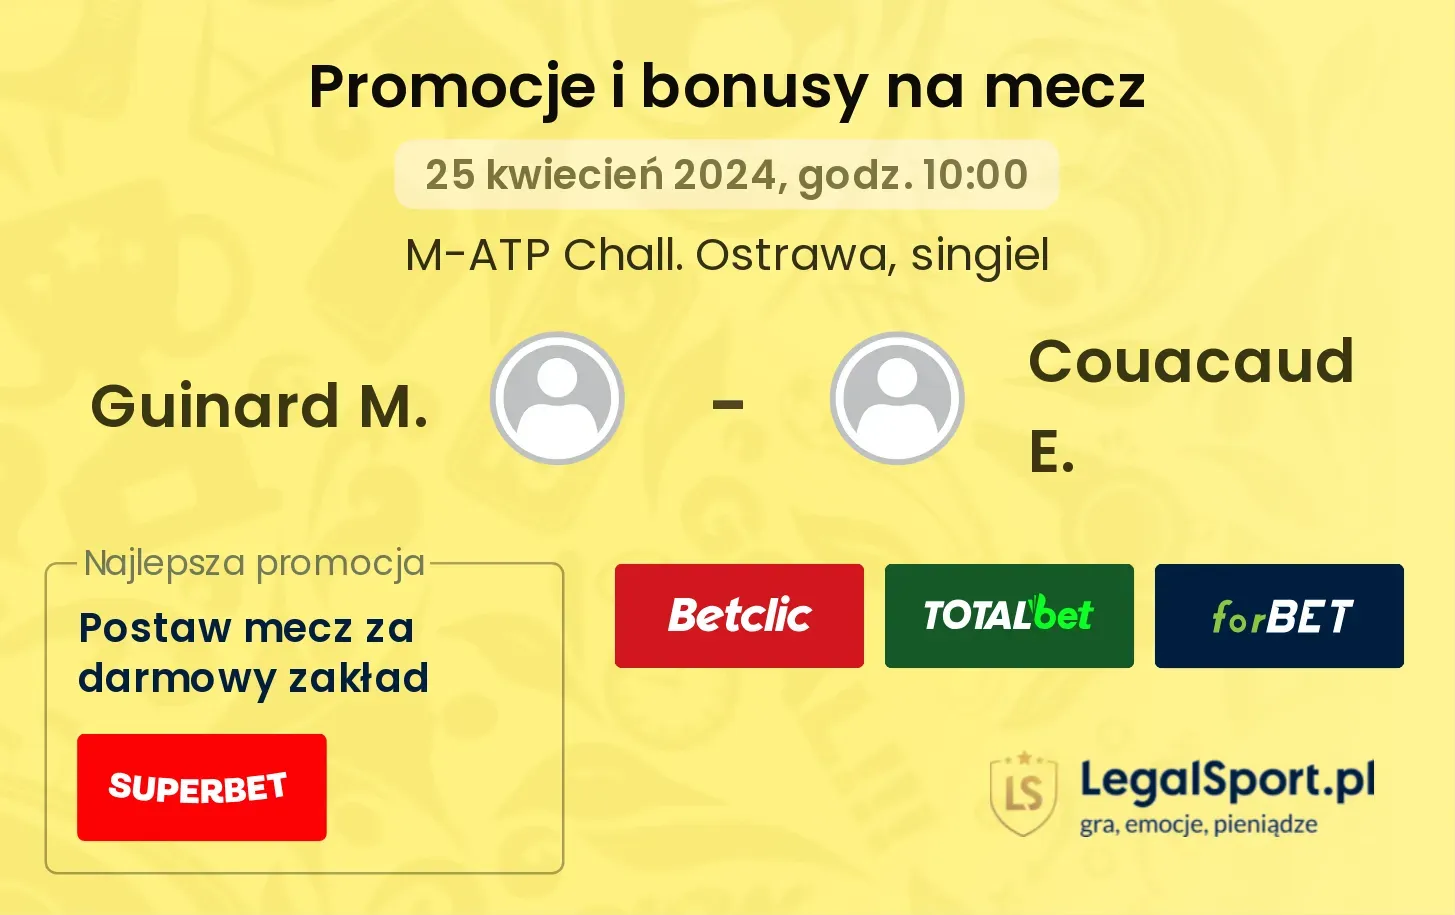 Guinard M. - Couacaud E. promocje bonusy na mecz